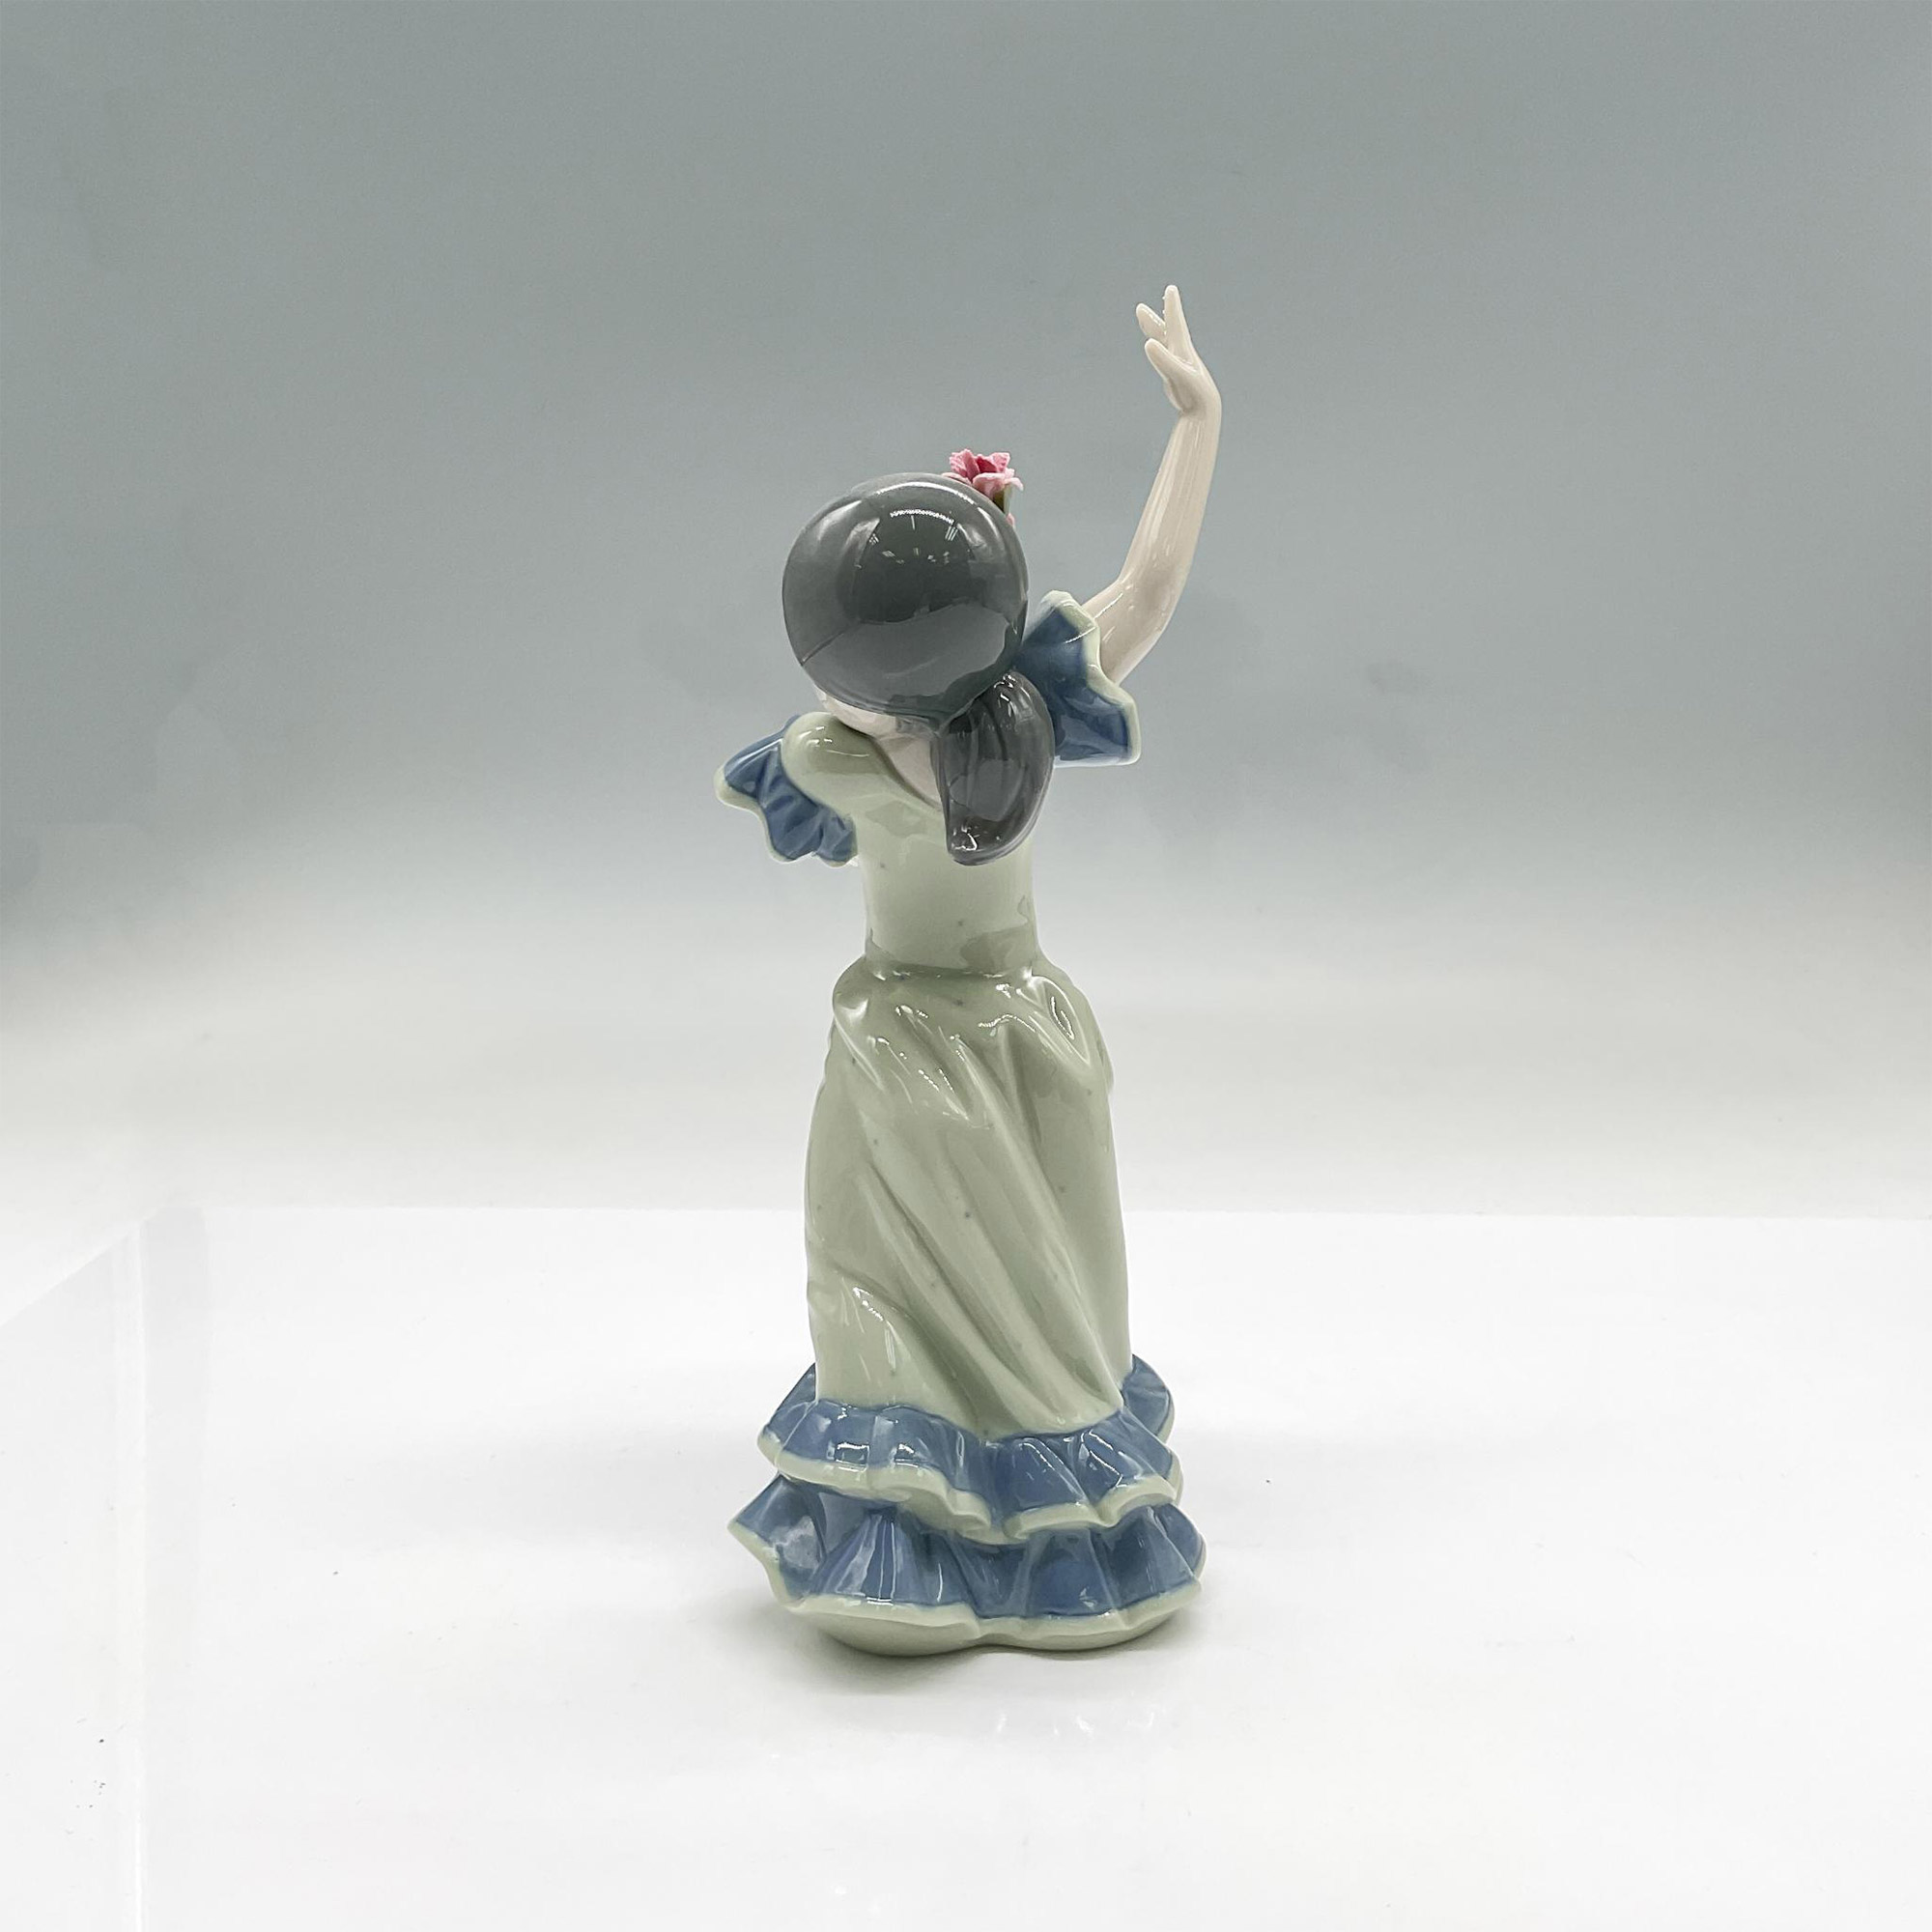 Lolita 1005192 - Lladro Porcelain Figurine - Image 2 of 4